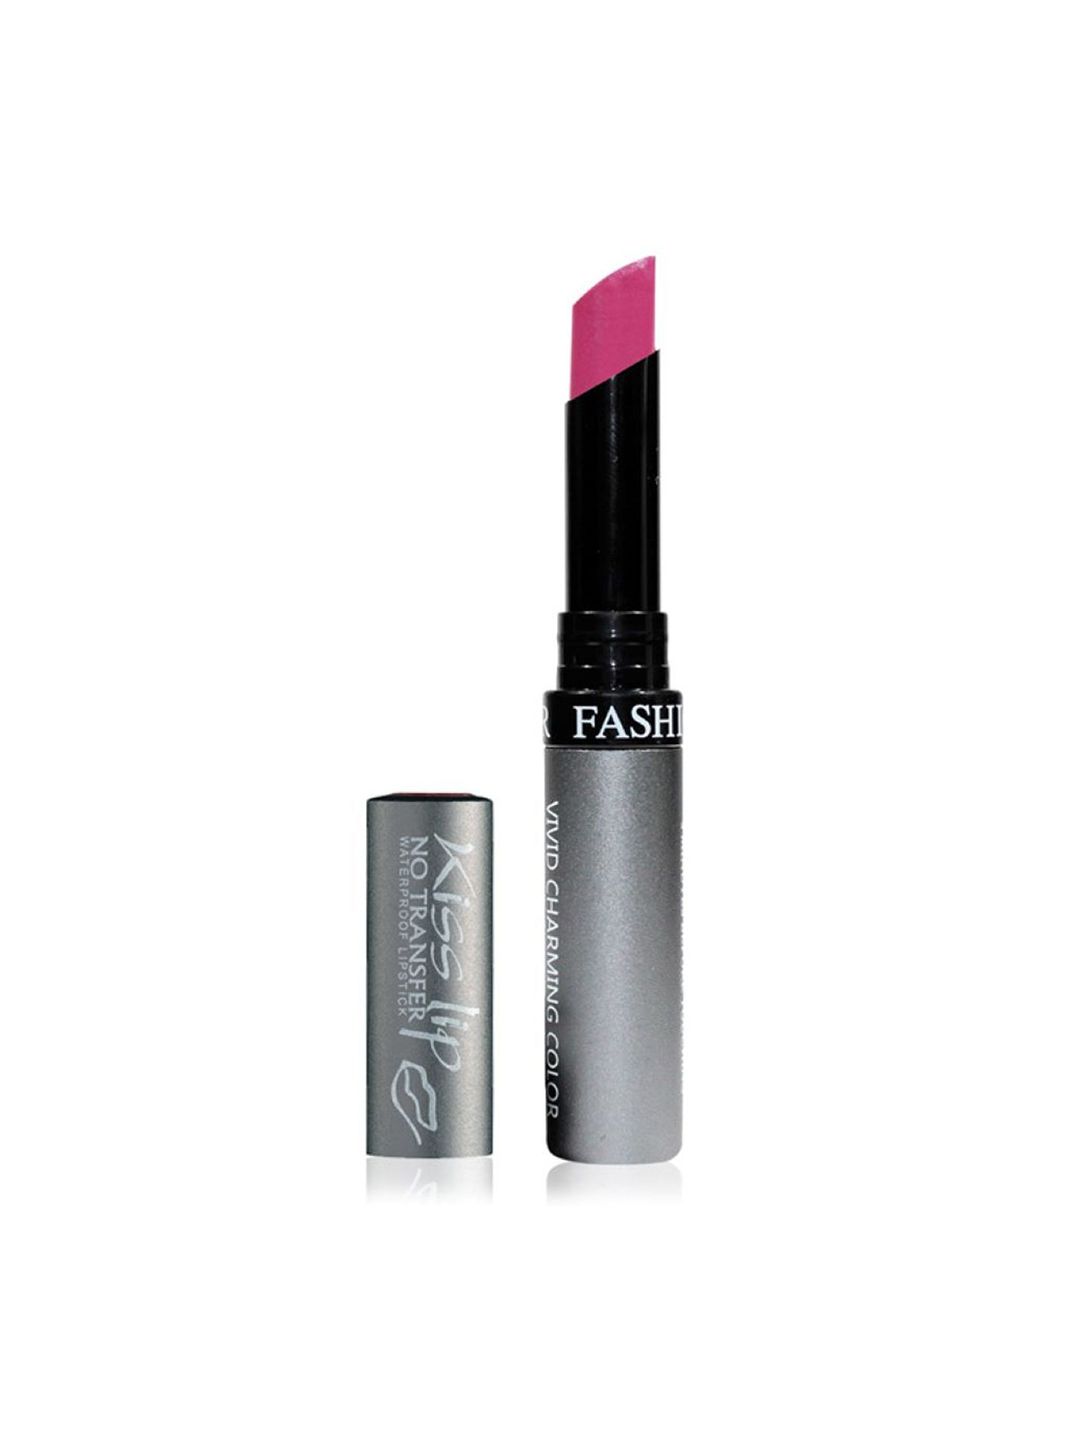 Fashion Colour Kiss Lip Vivid Charming Color No Transfer Lipstick - Cherry Pink 98 Price in India